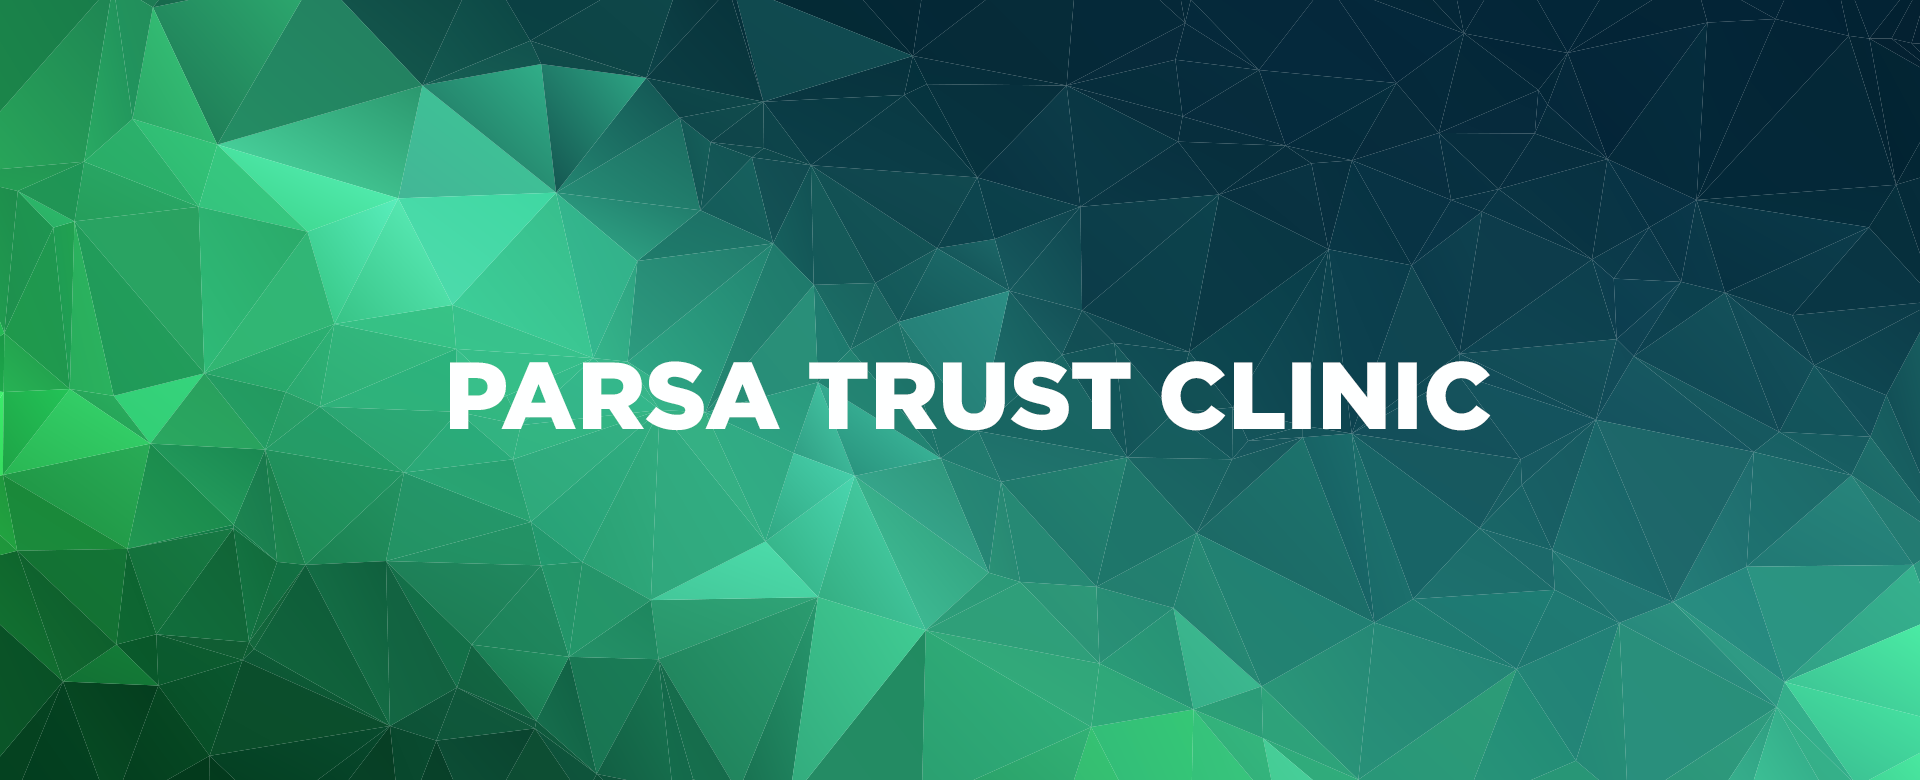 PARSA Trust Clinic (1)